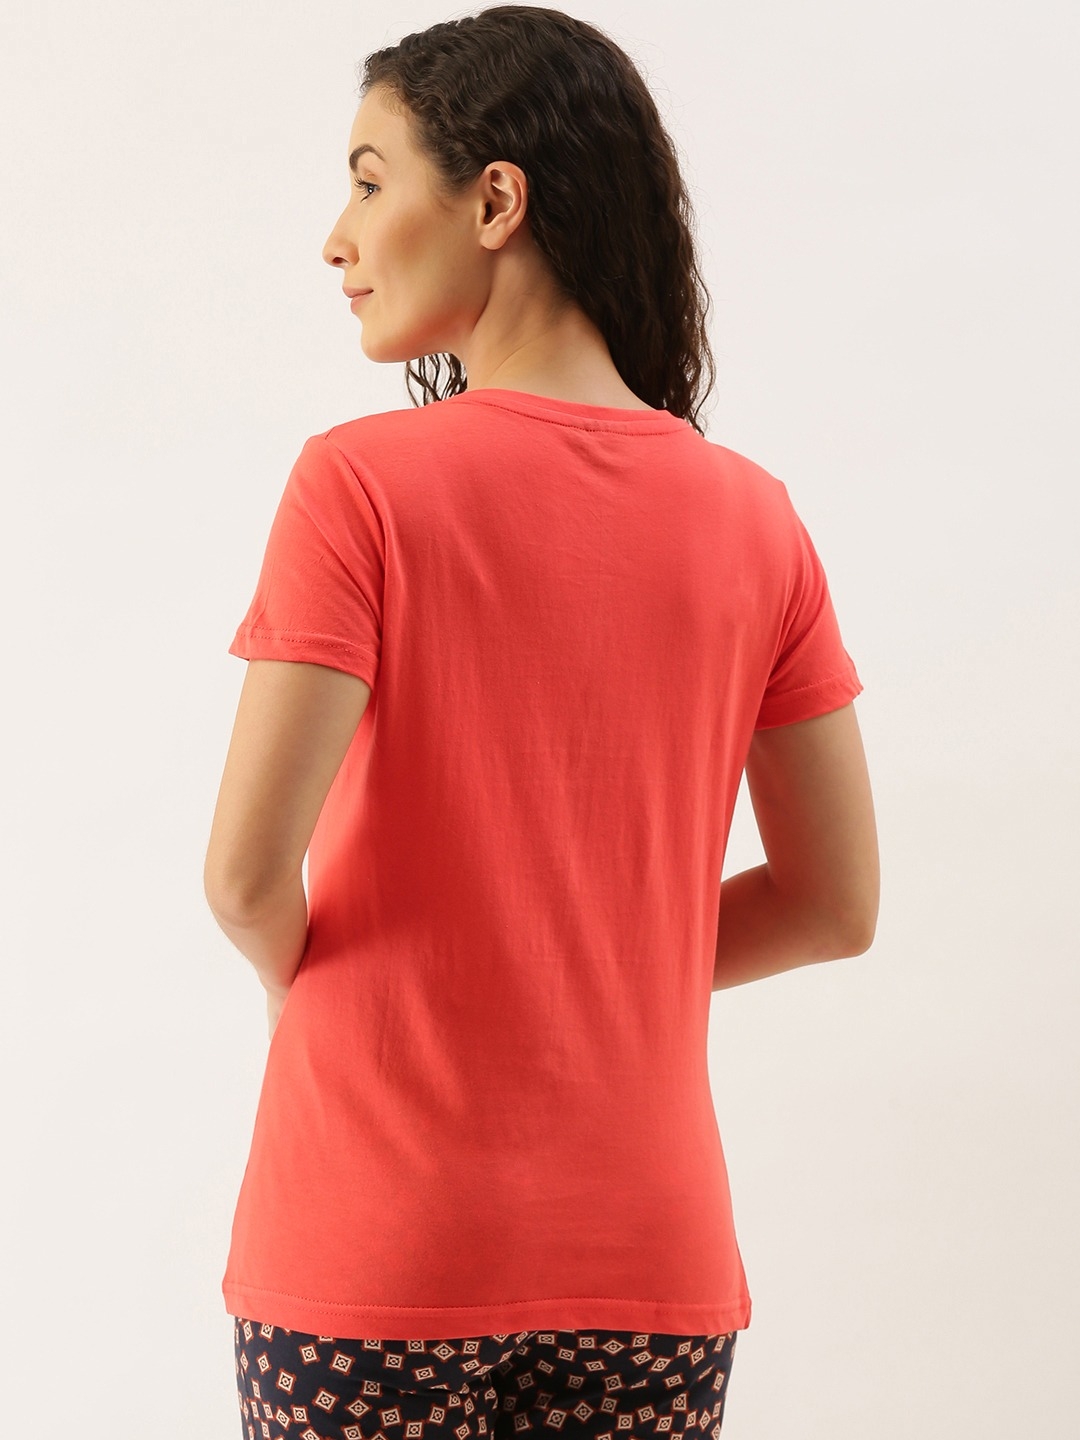 Kryptic | Women's Pink Cotton Printed T-Shirts 1